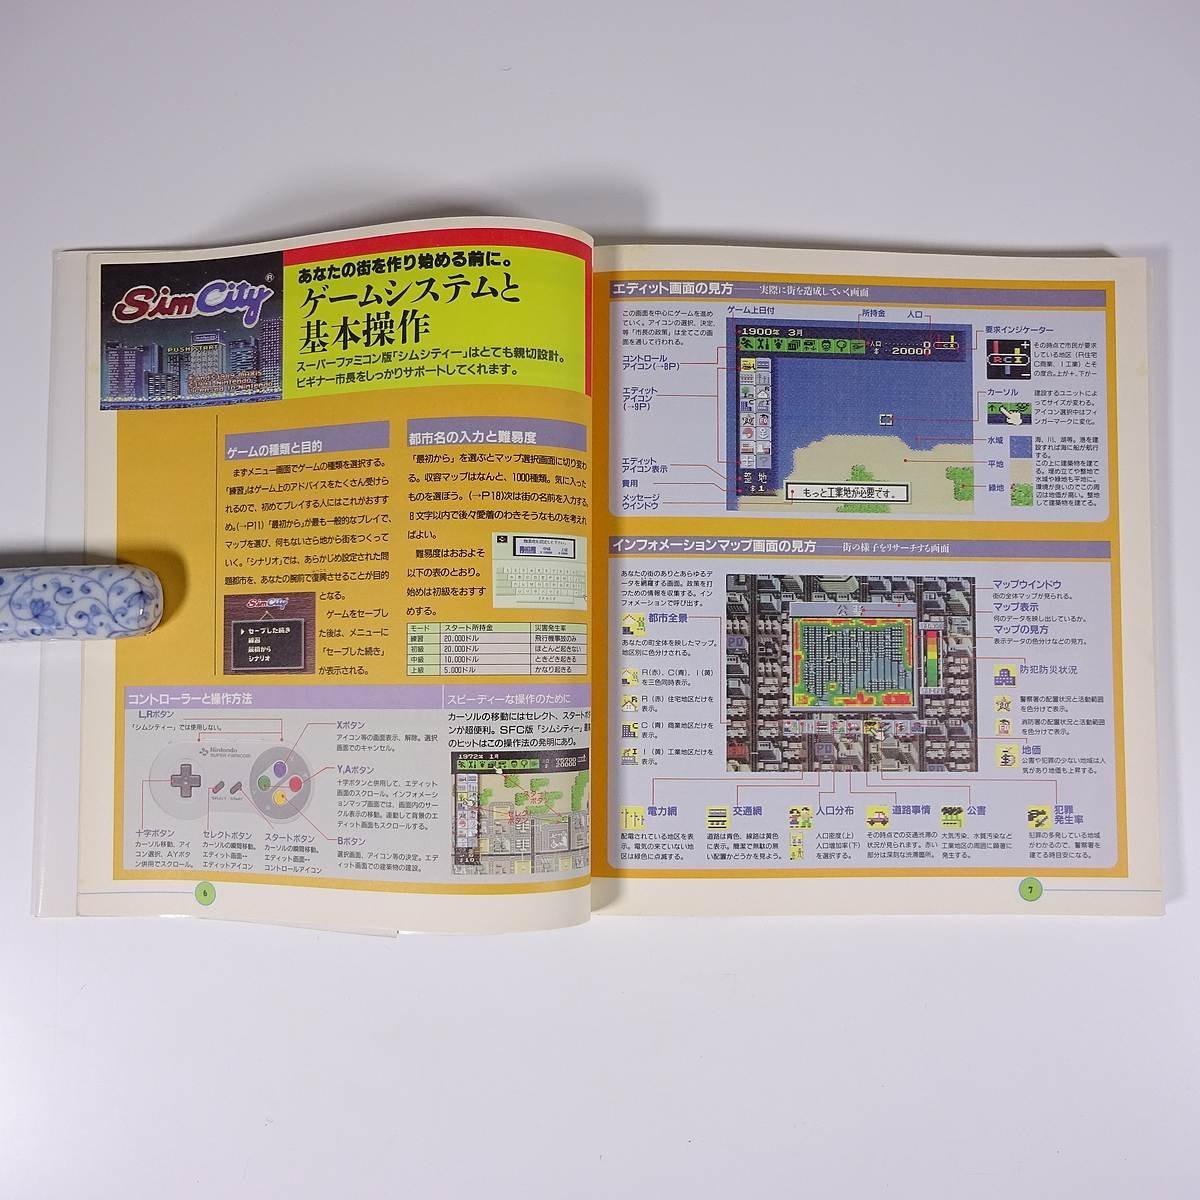 SimCity シムシティー 任天堂公式ガイドブック 攻略本 小学館 1995 単行本 ゲーム スーパーファミコン SFC_画像7